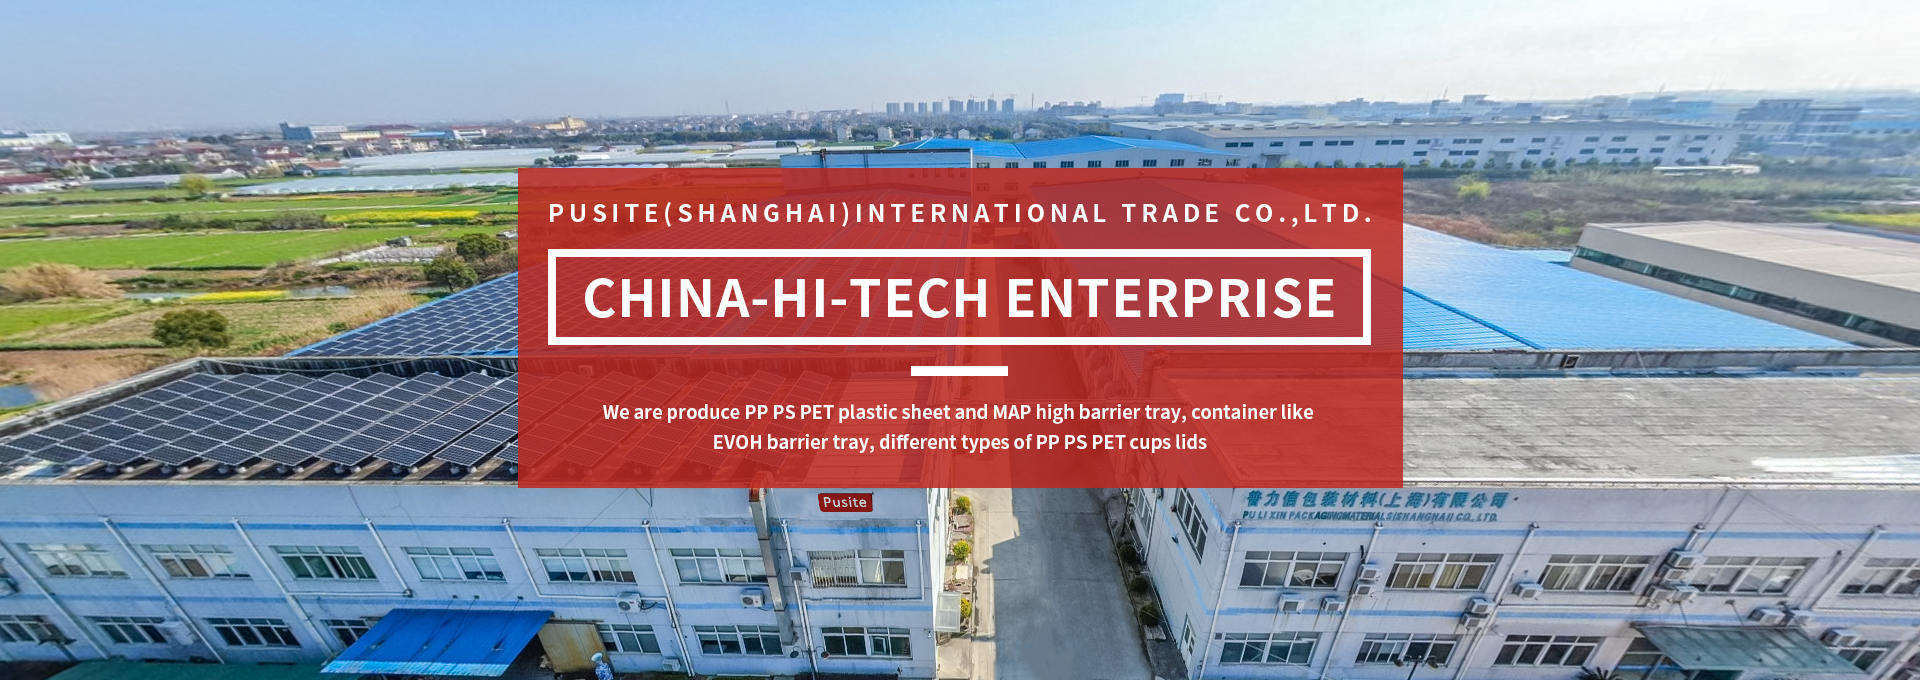 Pusite Shanghai International Trade